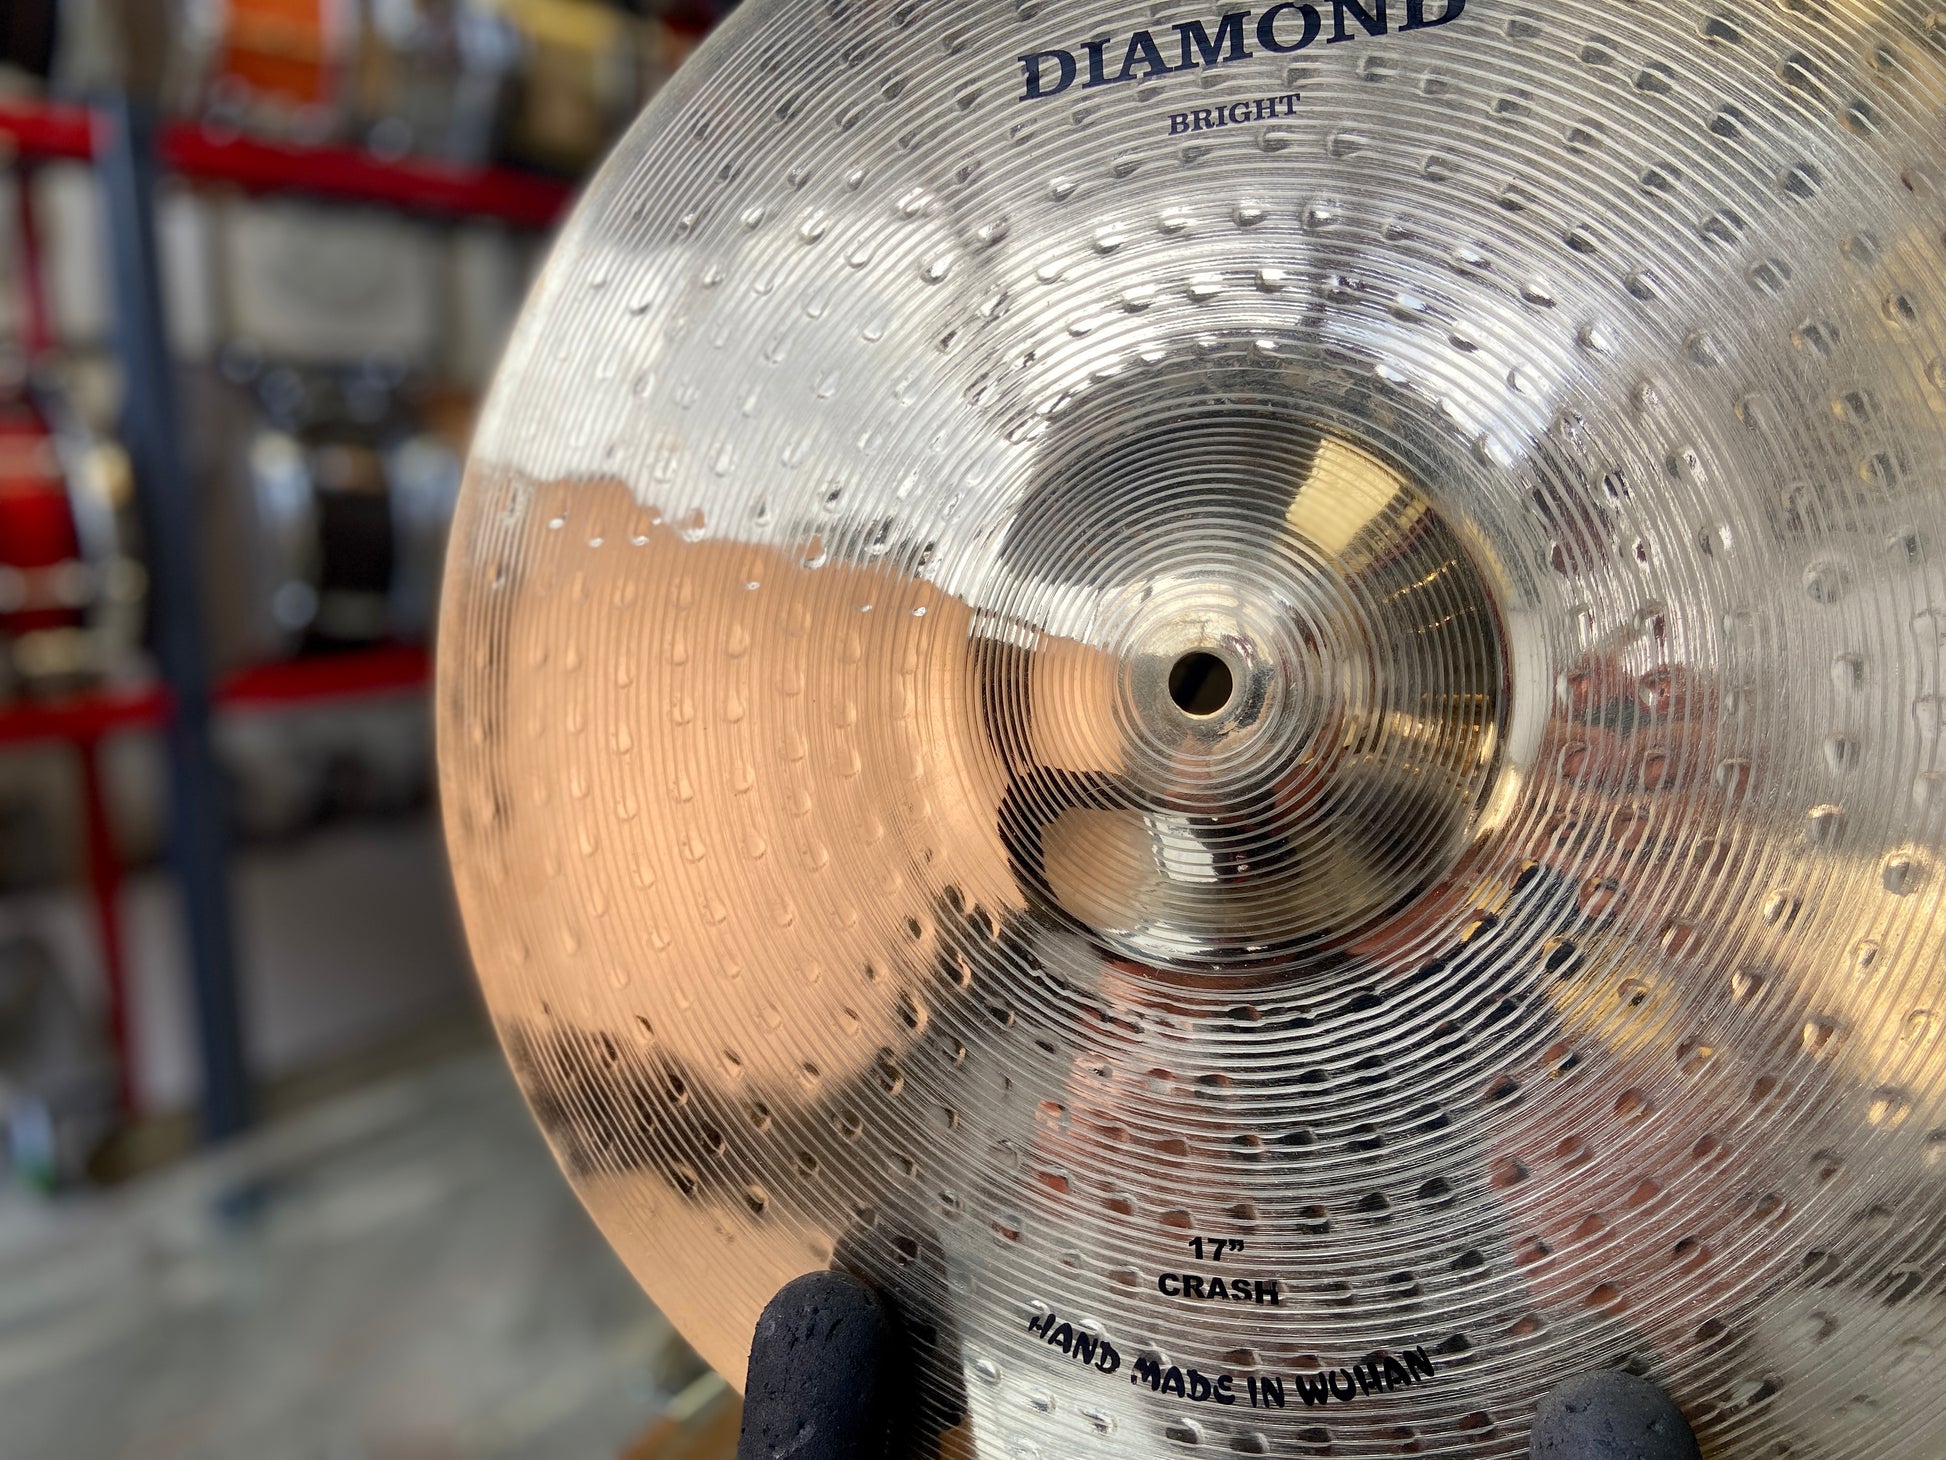 Diamond Bright 17" Crash Cymbal